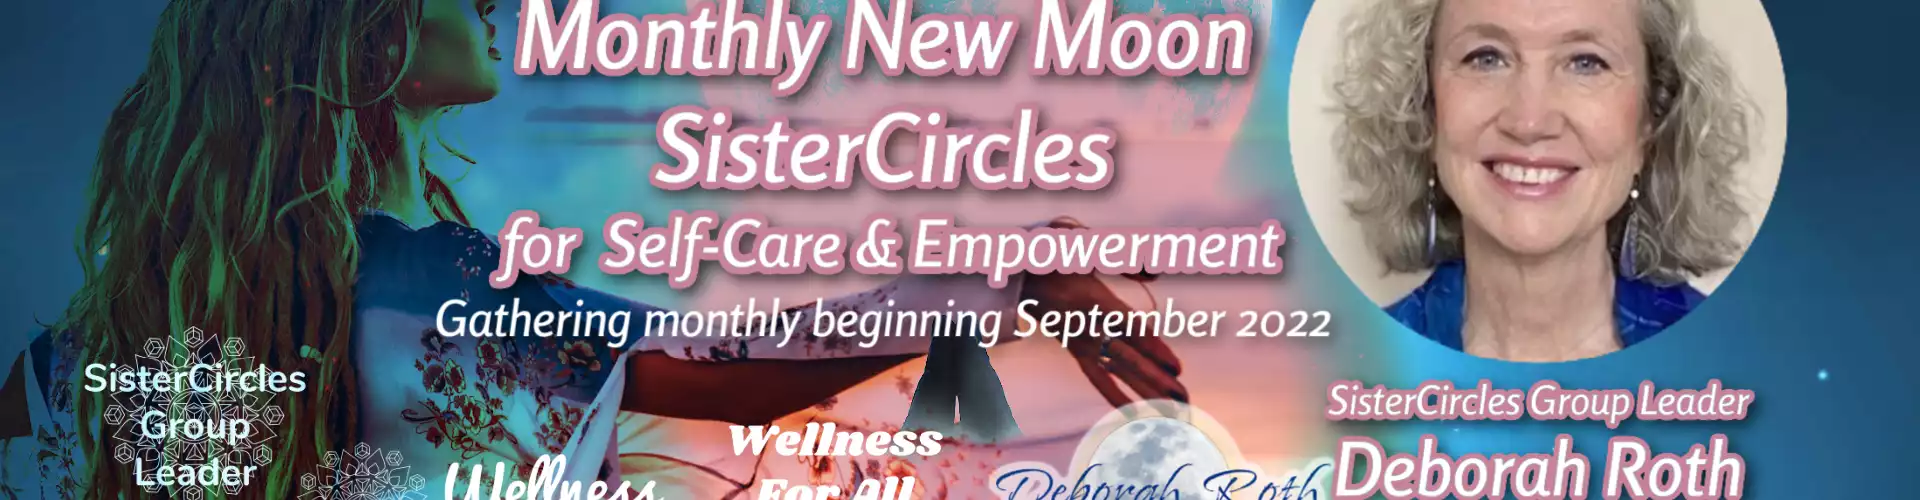 New Moon SisterCircles with WU Group Leader Deborah Roth